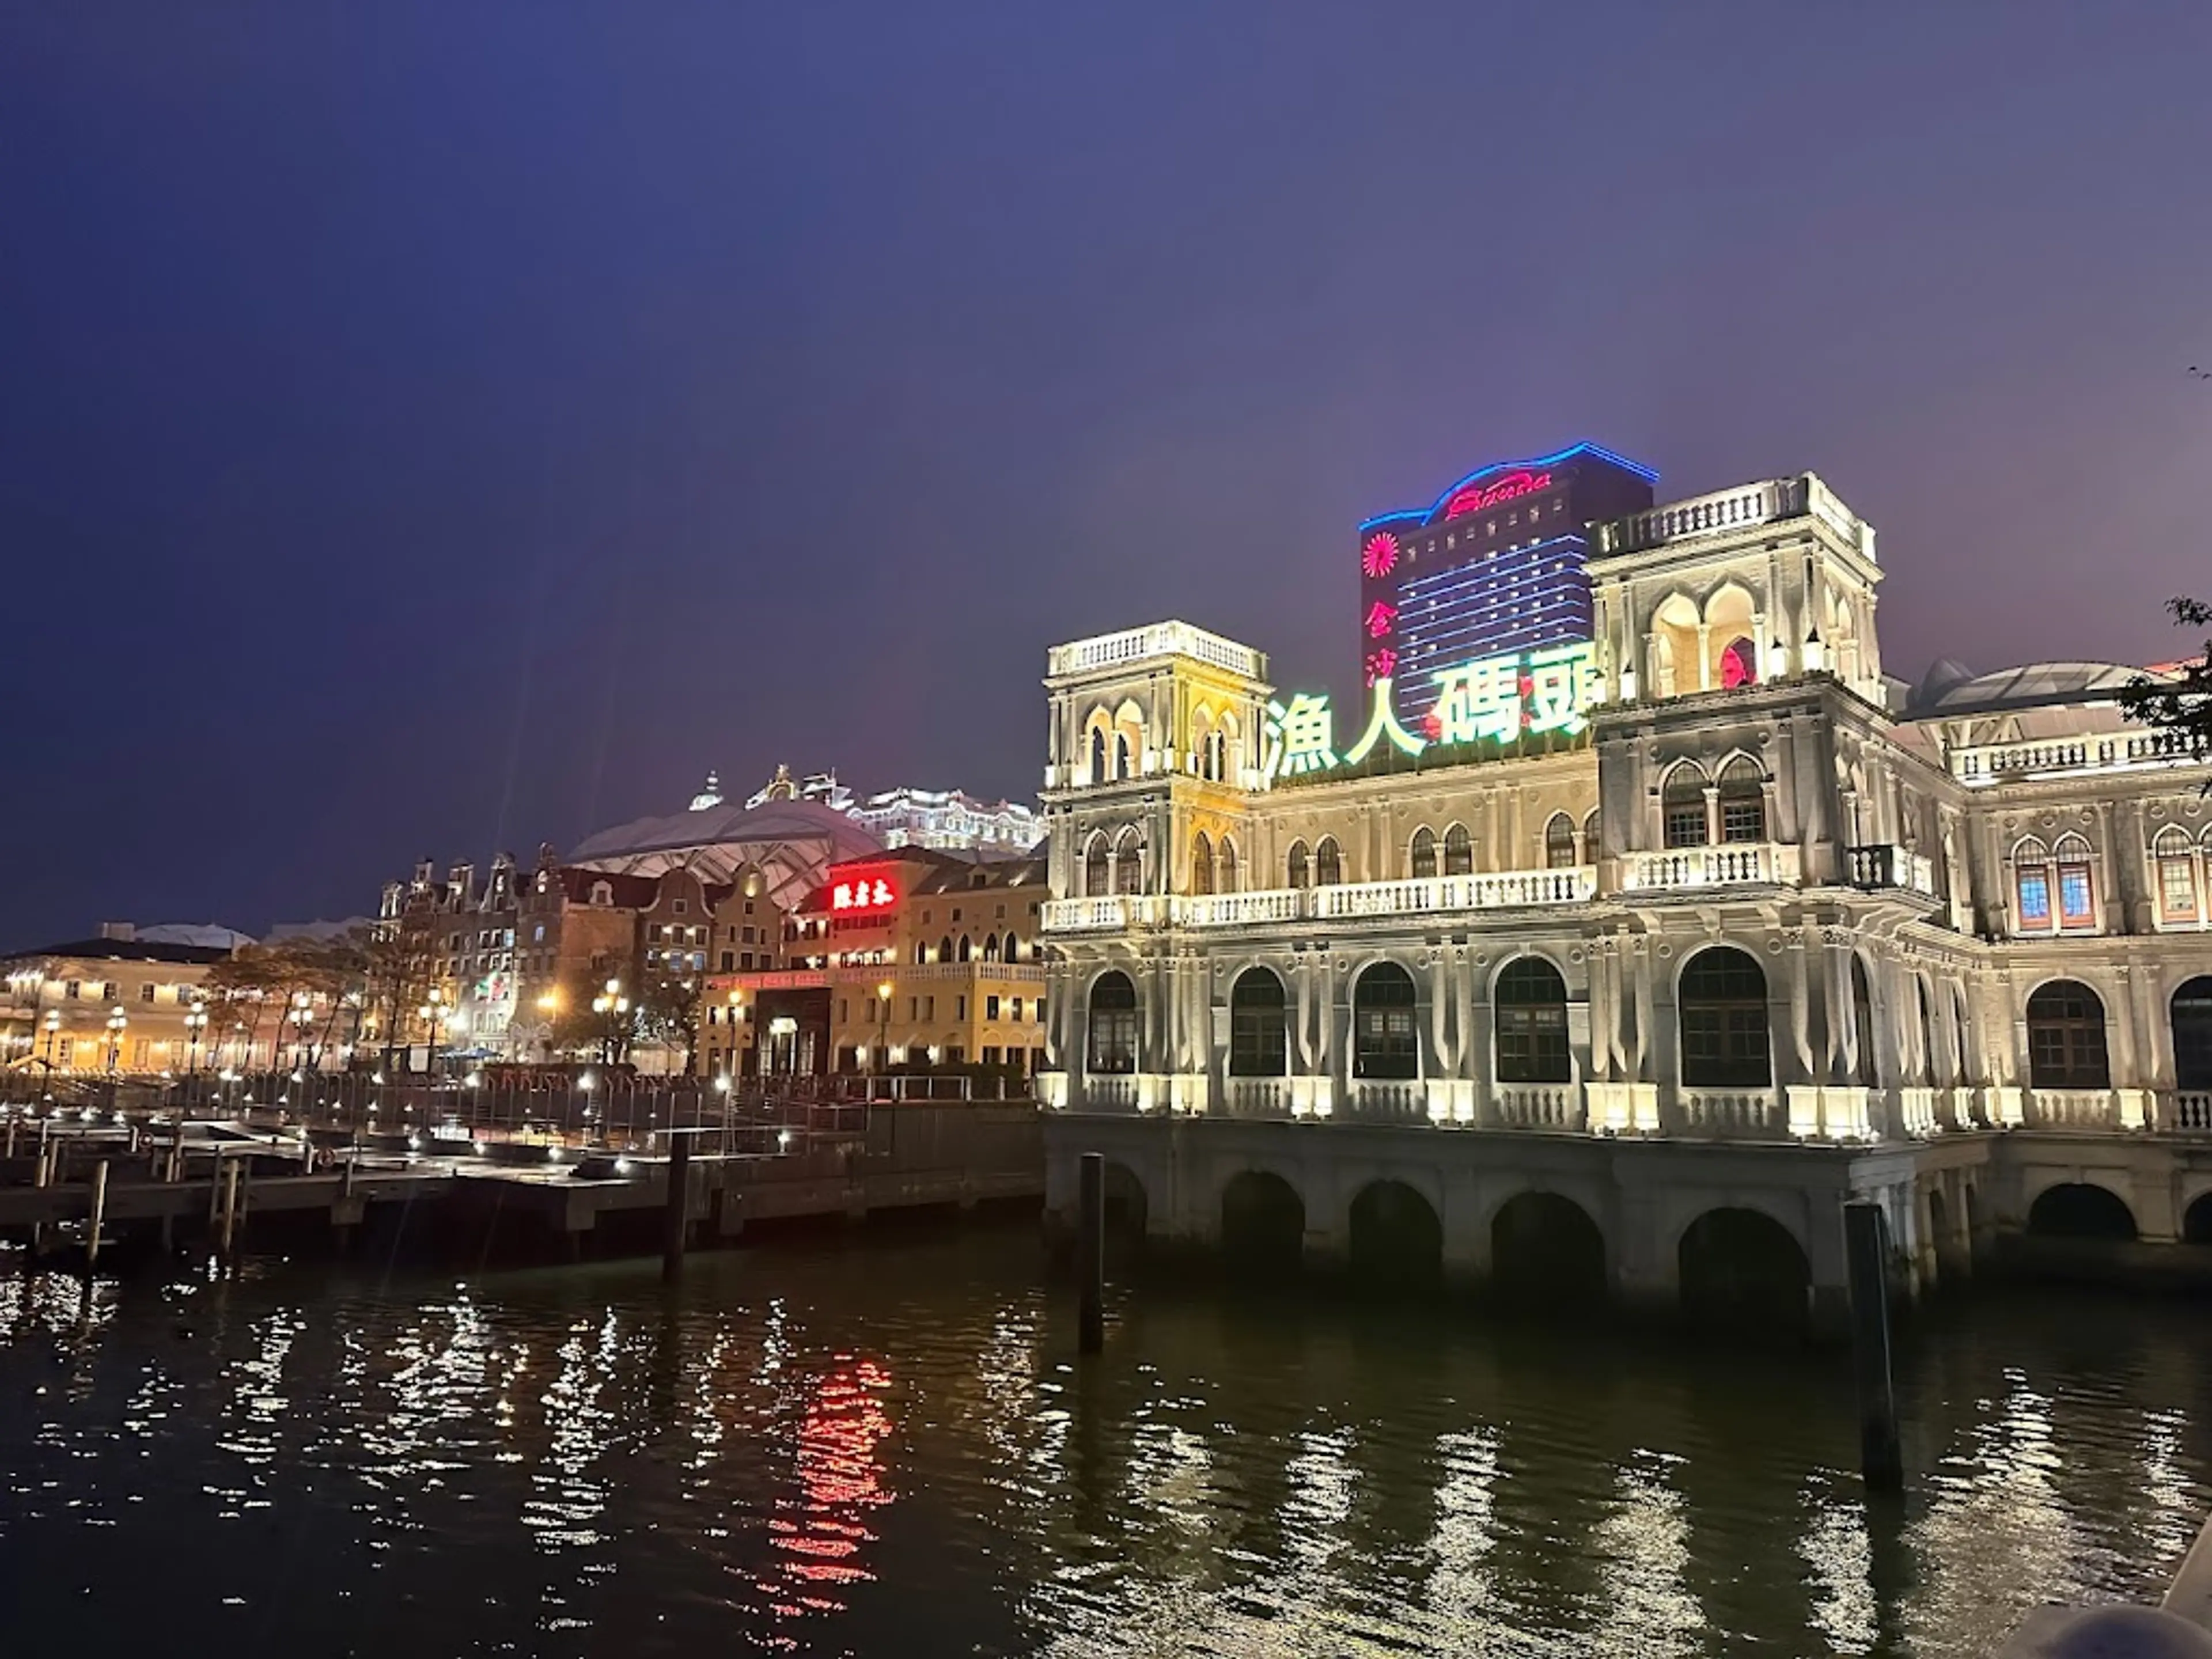 Macau Fisherman's Wharf